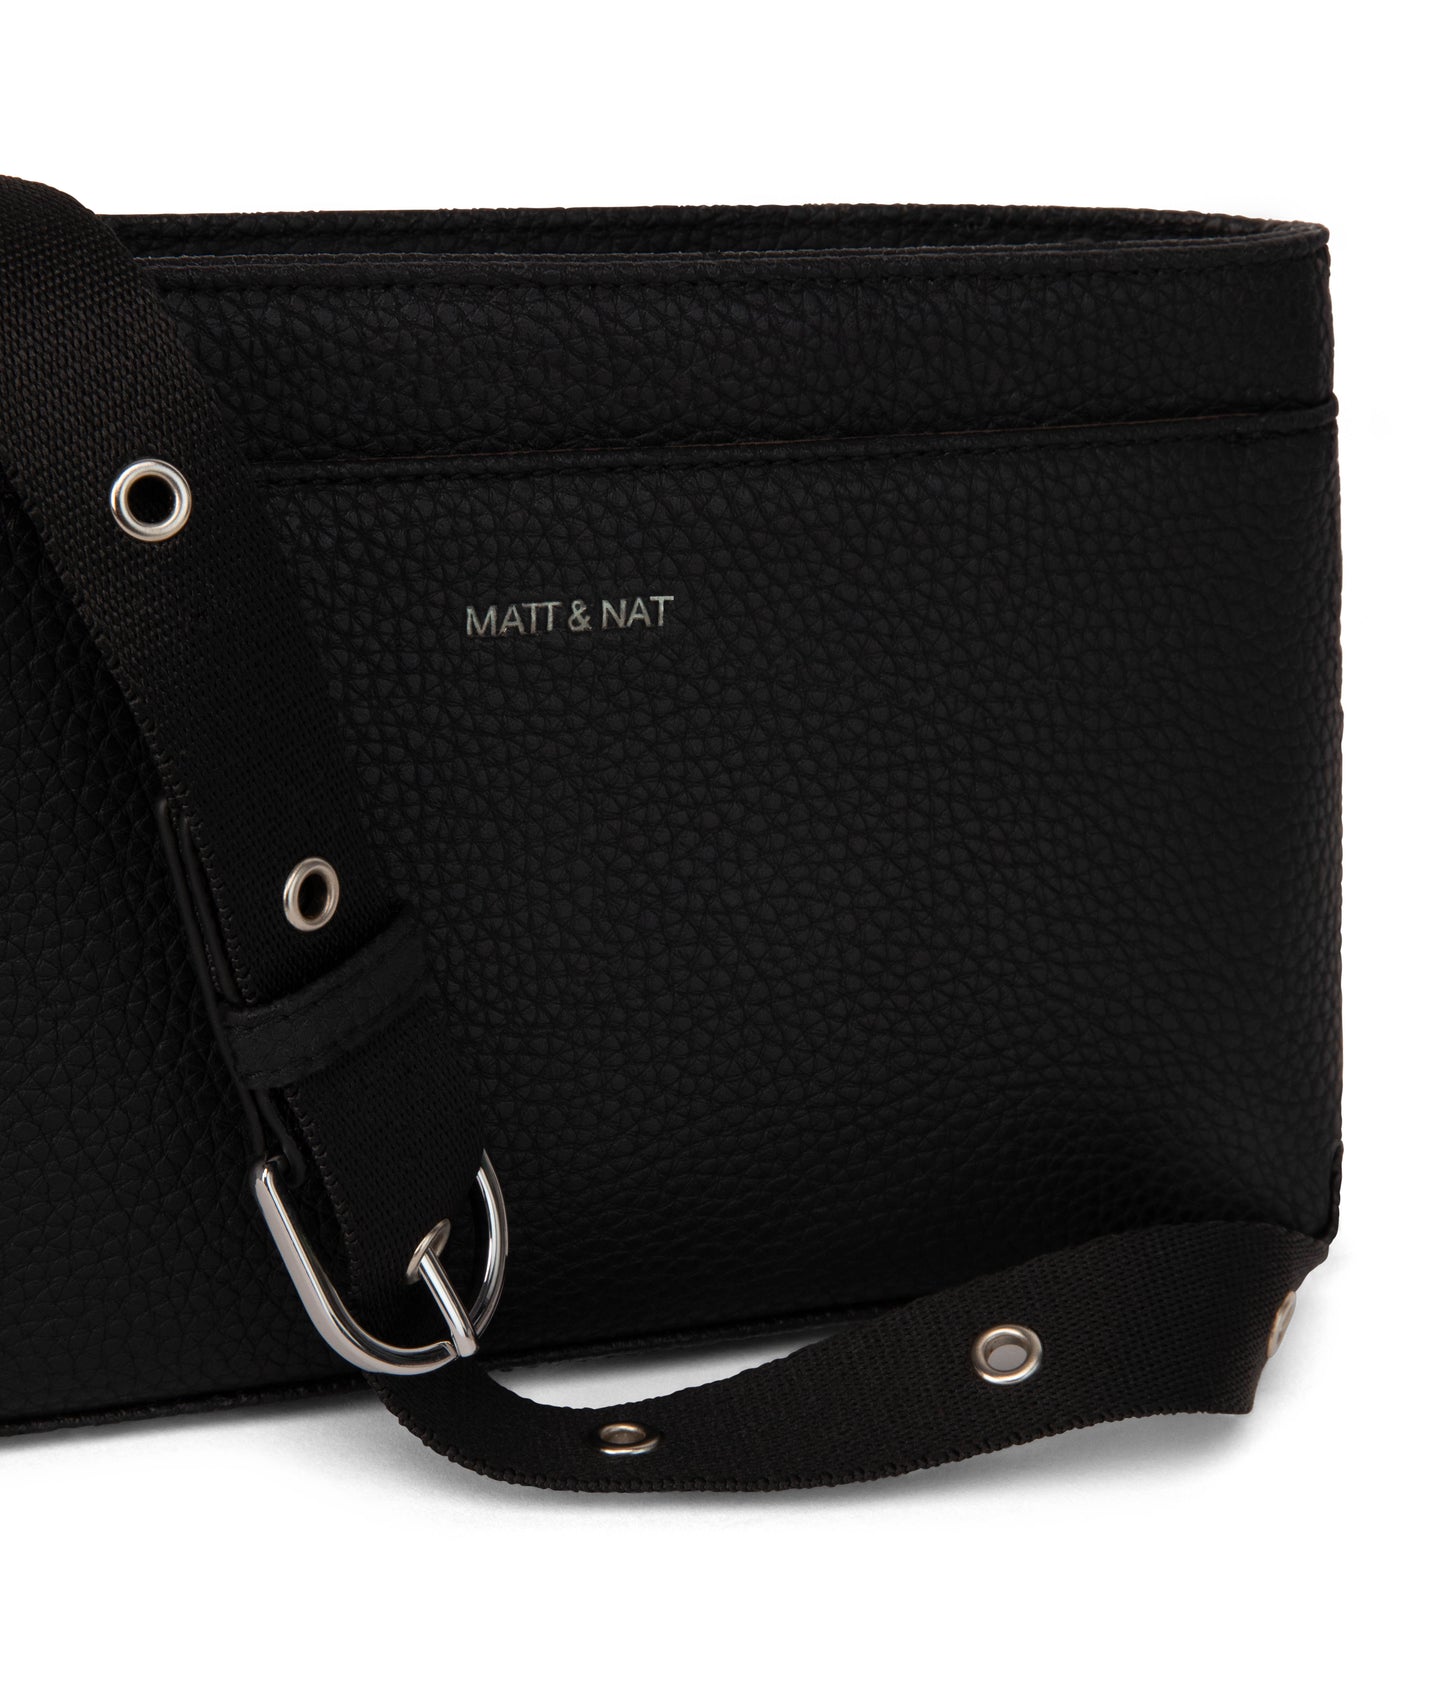 Matt & Nat - Gor Belt Bag - Black